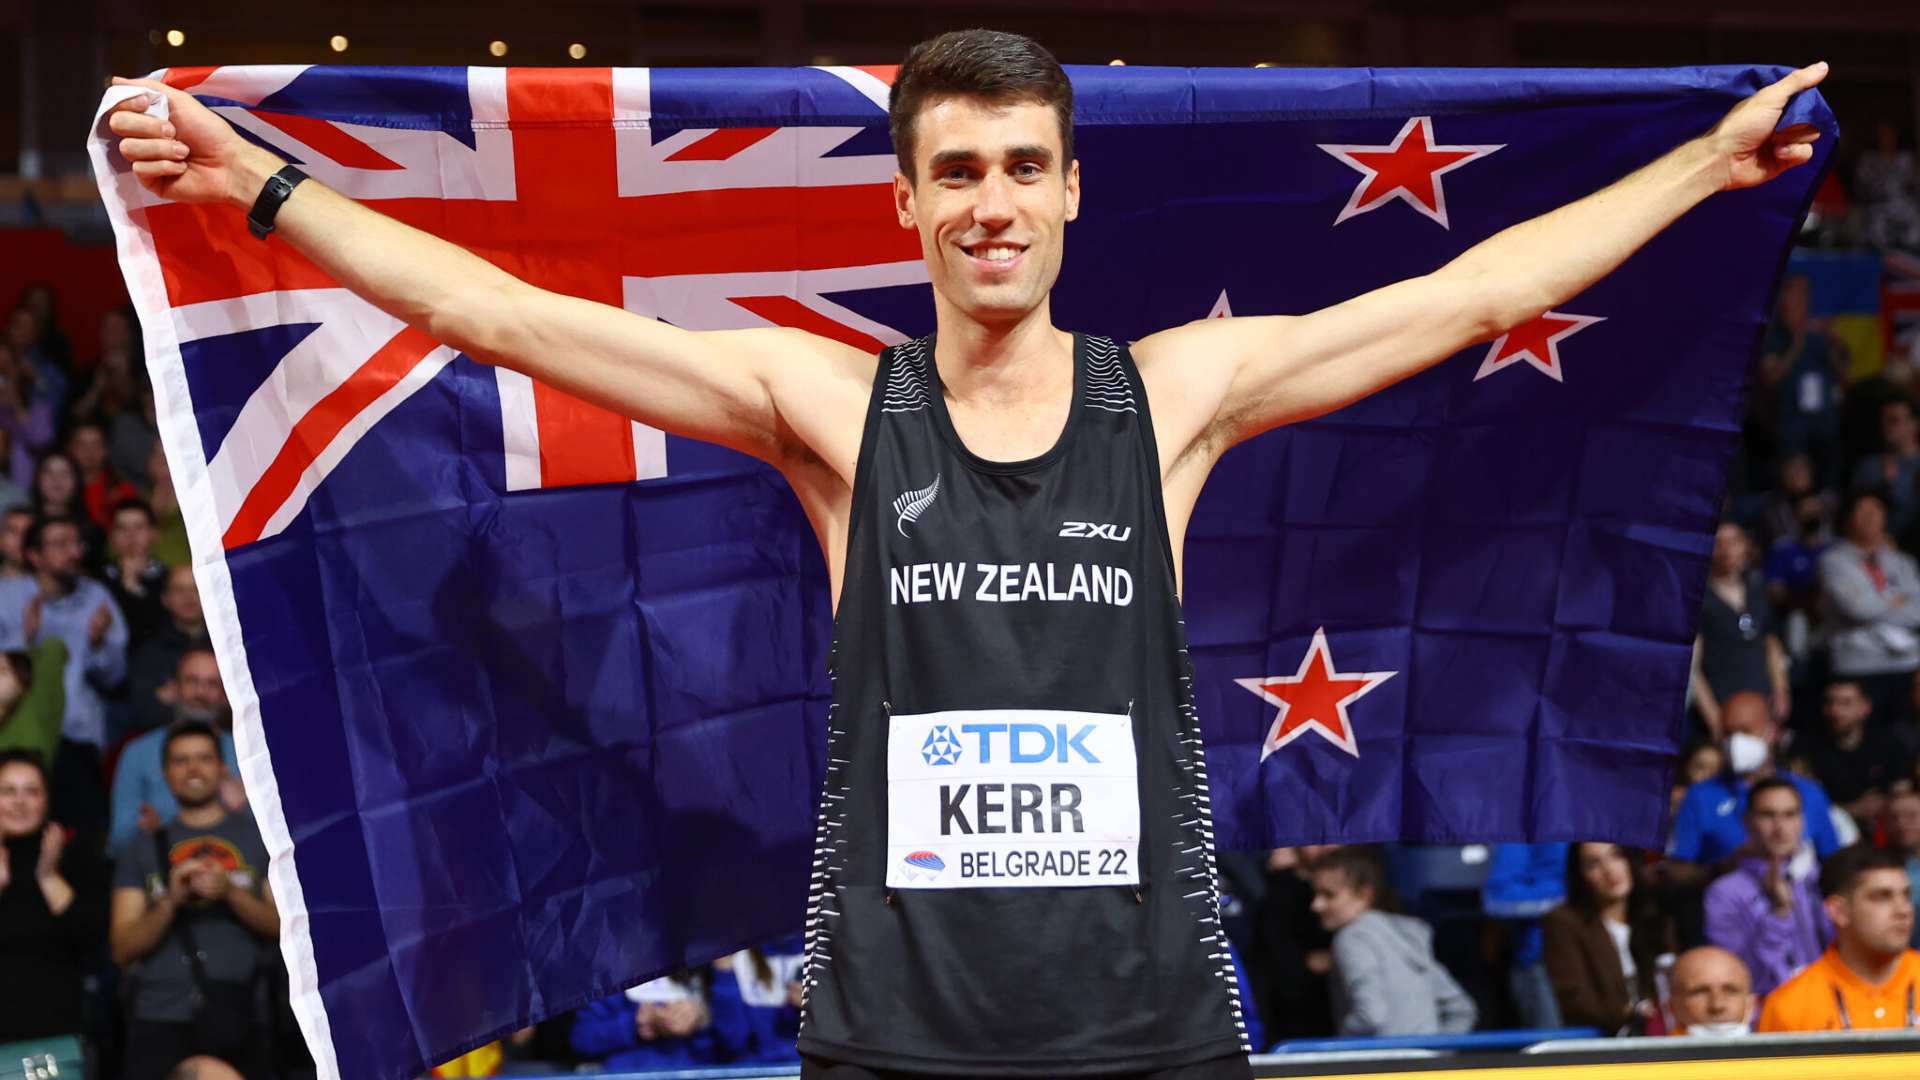 Hamish Kerr holding the New Zealand flag at the World Athletics Indoor Championships 2022 (Image Credits - Twitter)